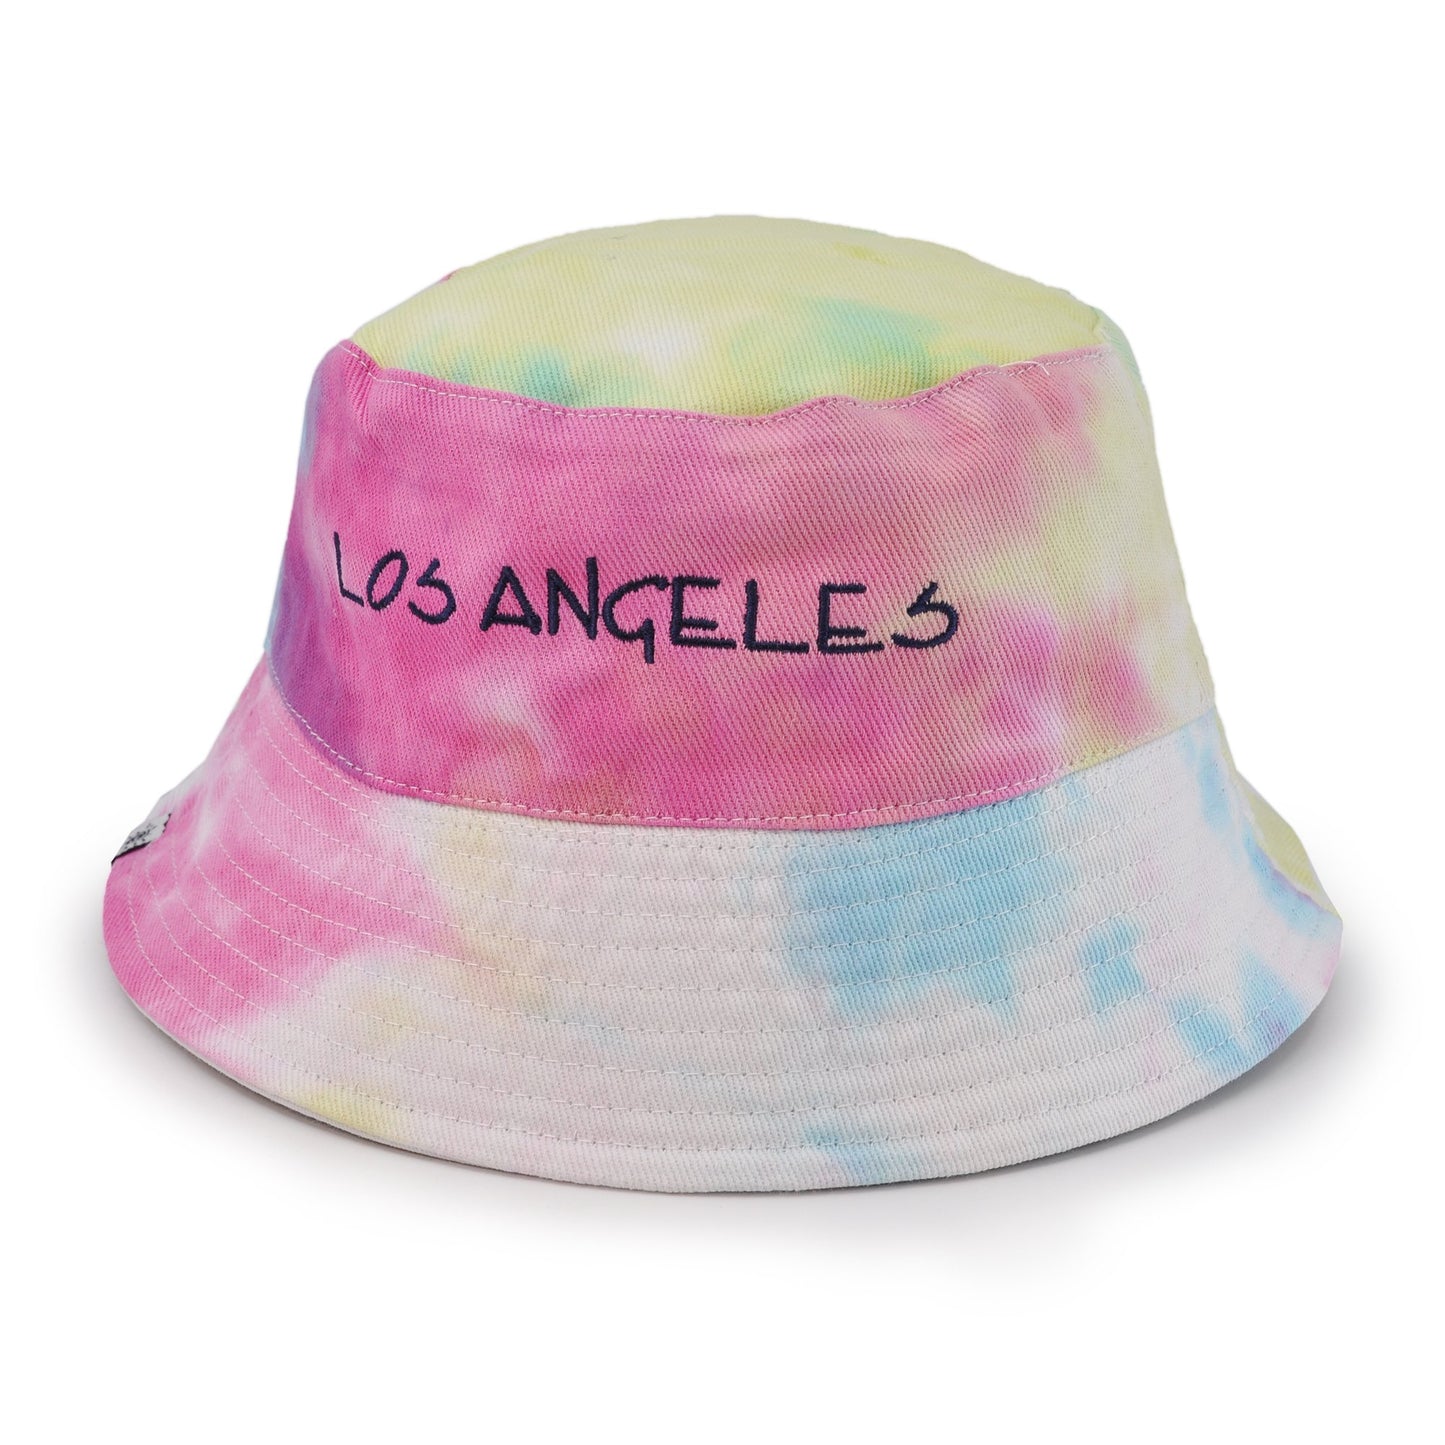 Reversible Your Beach City Unisex 100% Cotton Packable Summer Travel Bucket Beach Sun Hat Outdoor Cap. (Tie Dye Rainbow/White)